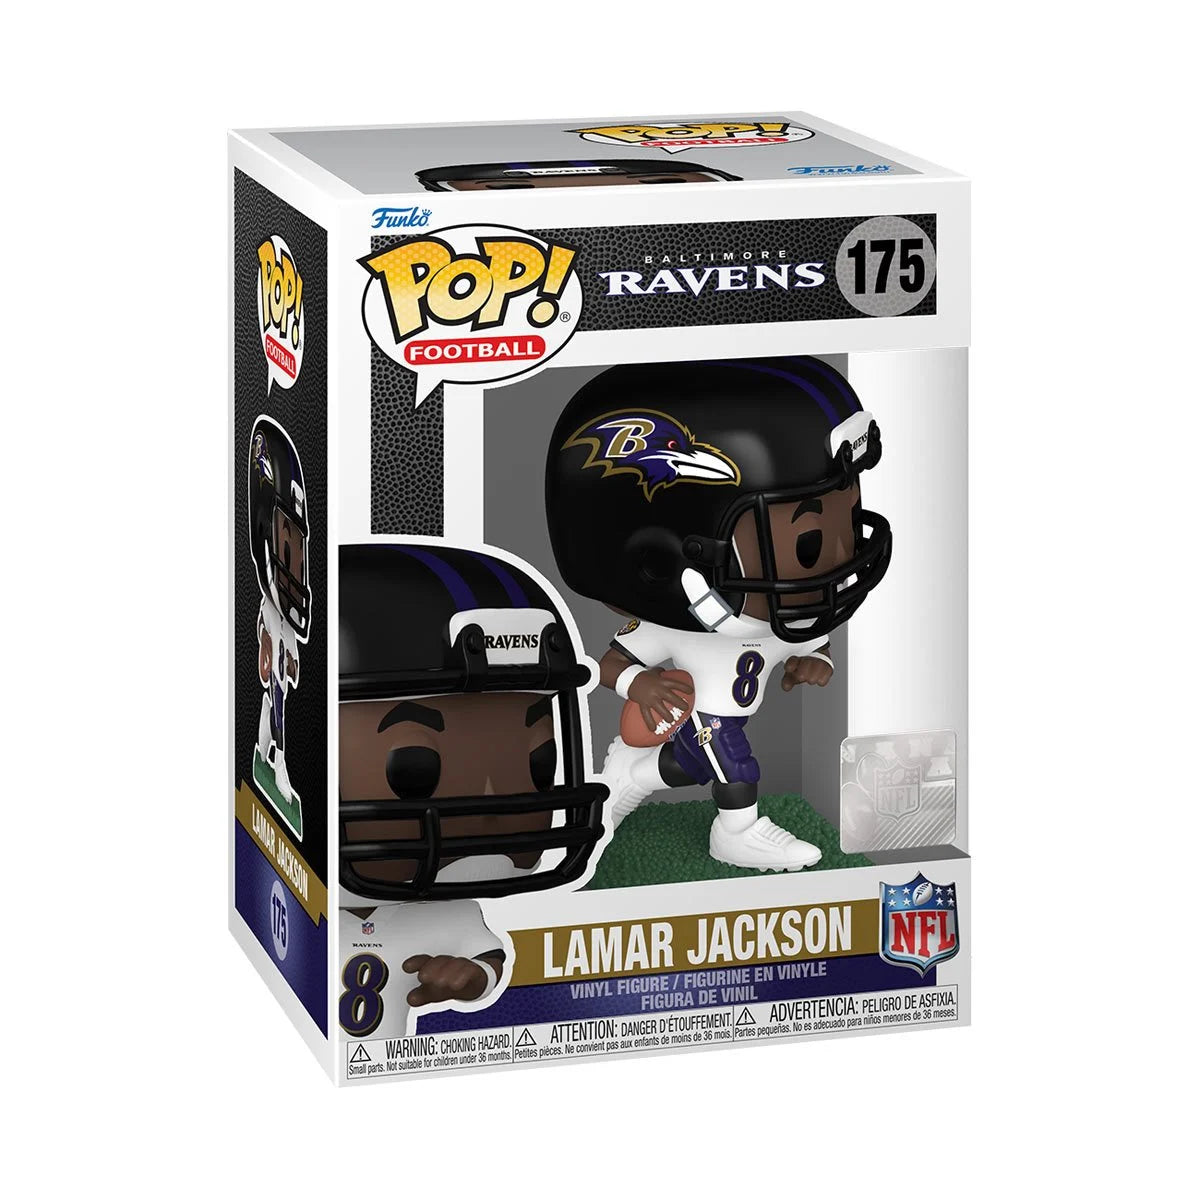 Lamar Jackson NFL Baltimore Ravens (Away) Pop! Vinyl Figure